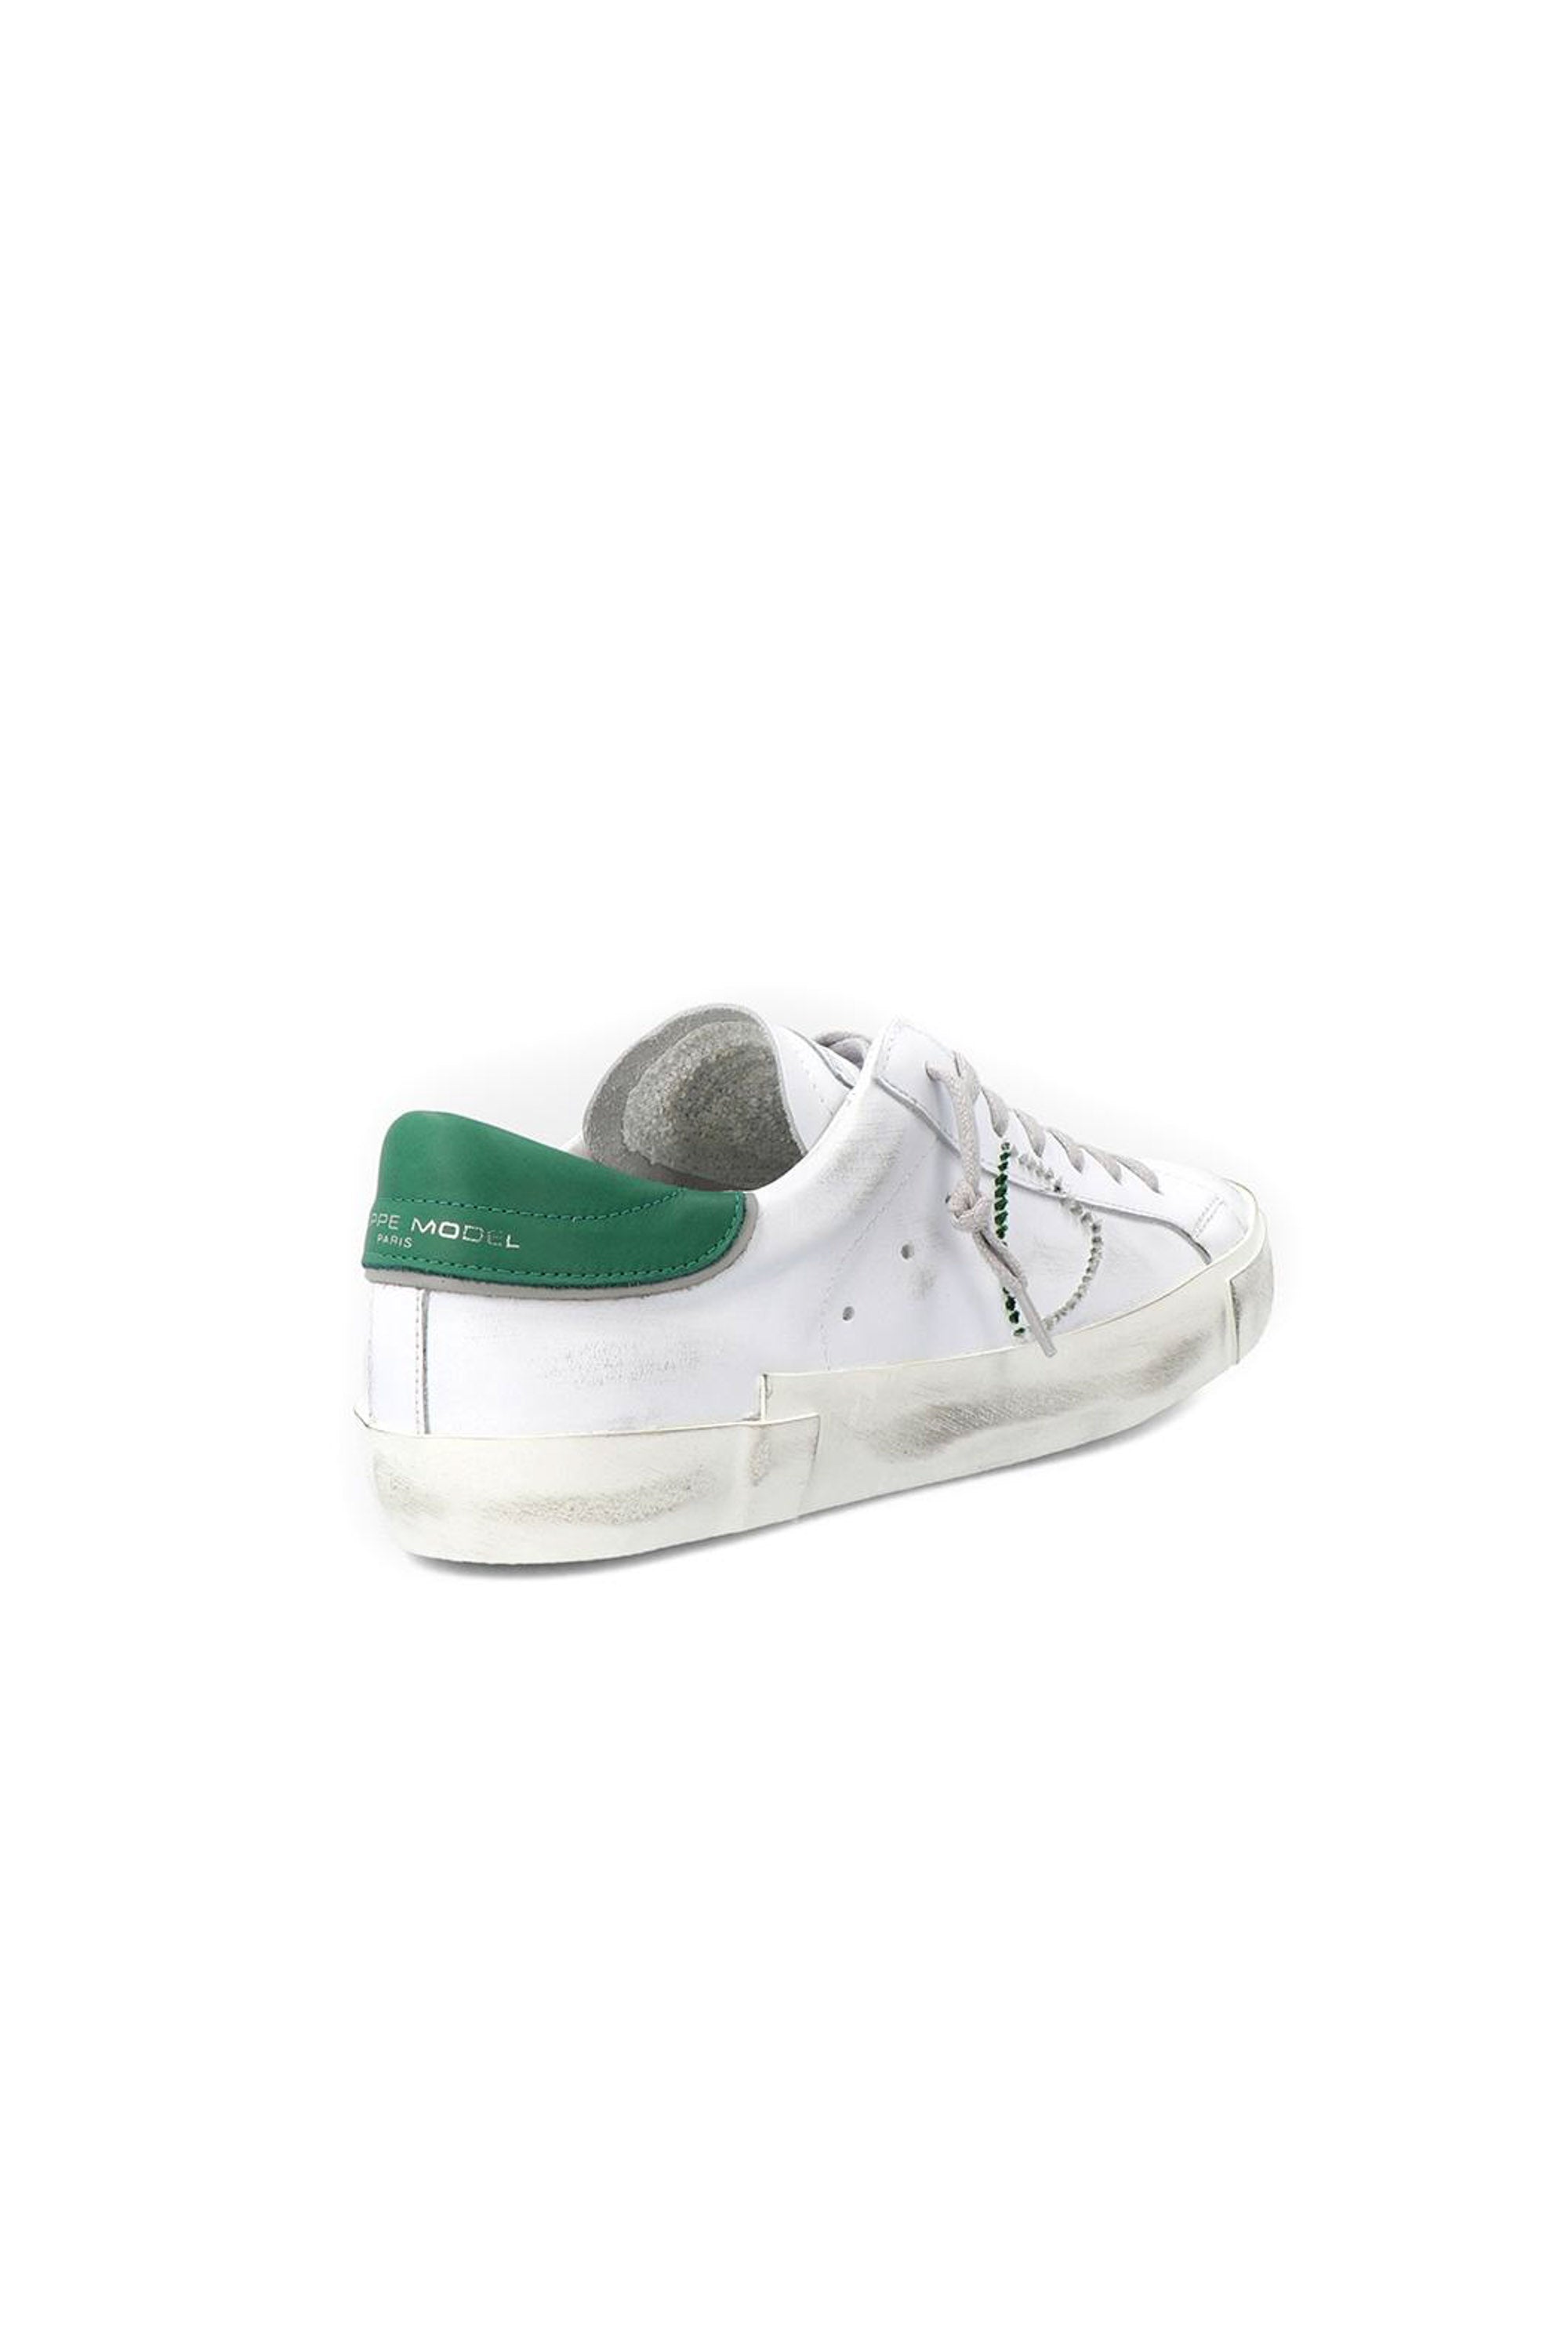 Low prsx sneaker with green heel tab